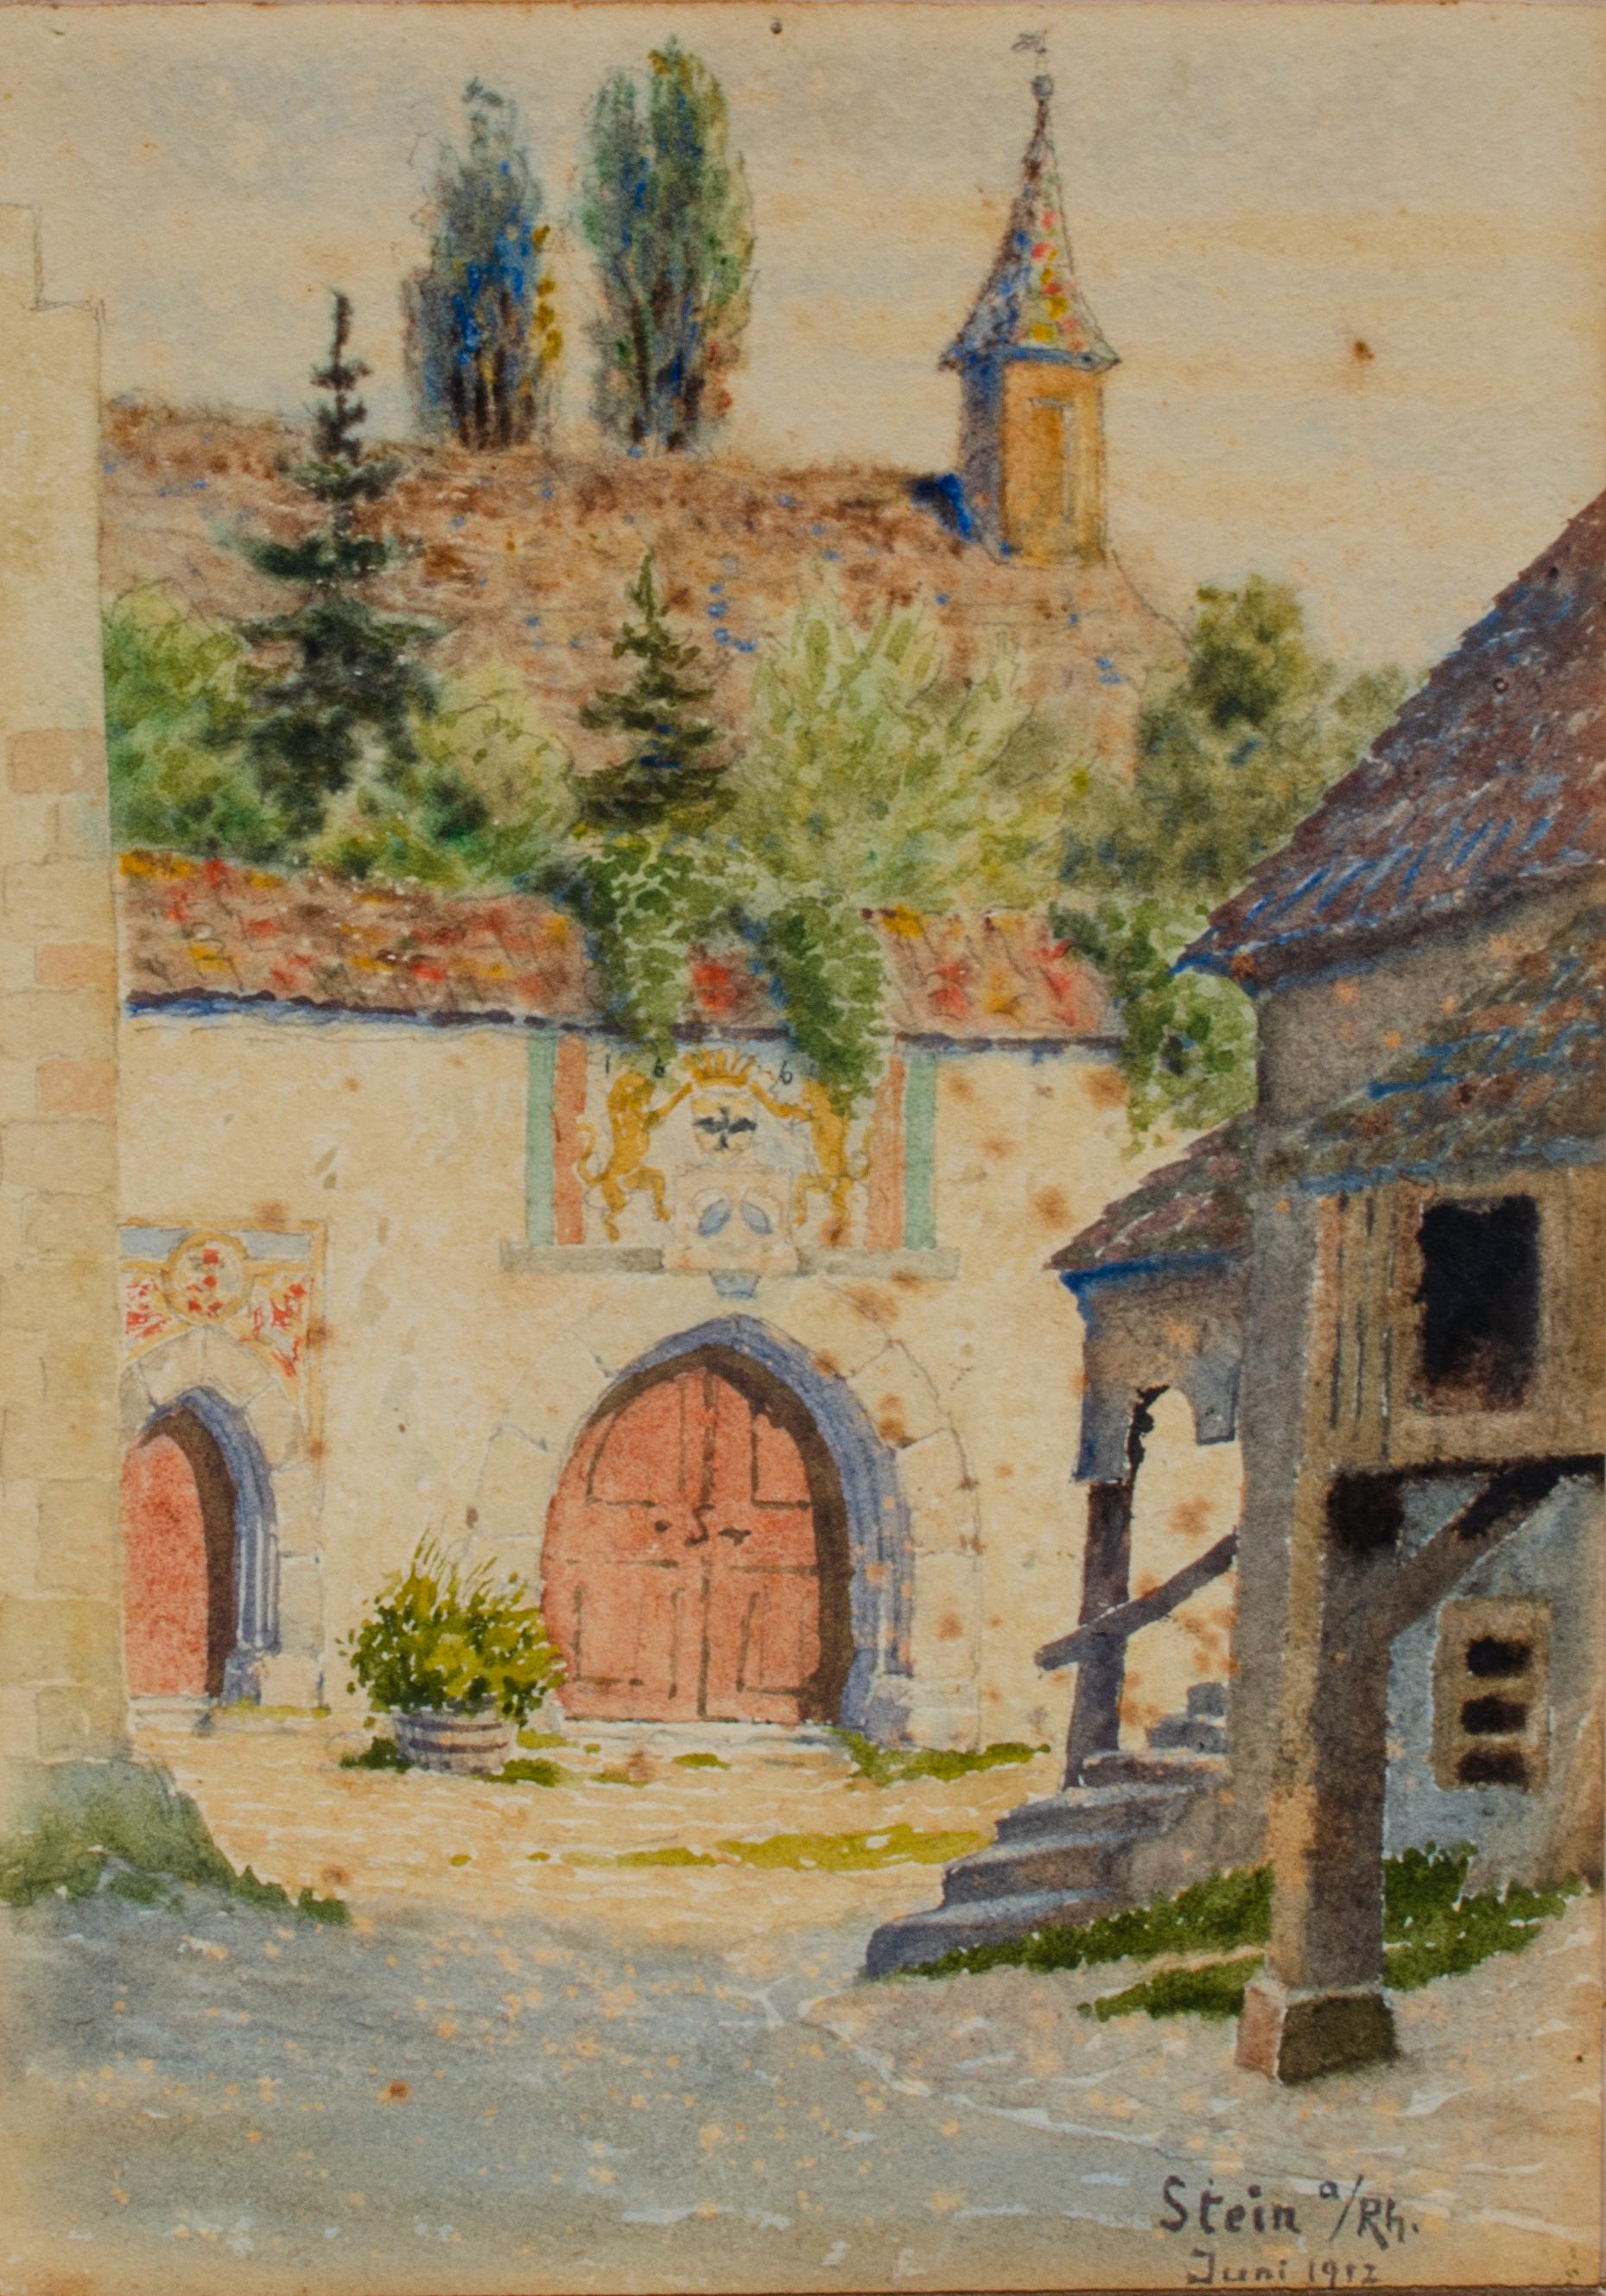 Unknown Landscape Art - Stein am Rhine, 1912 German Watercolor